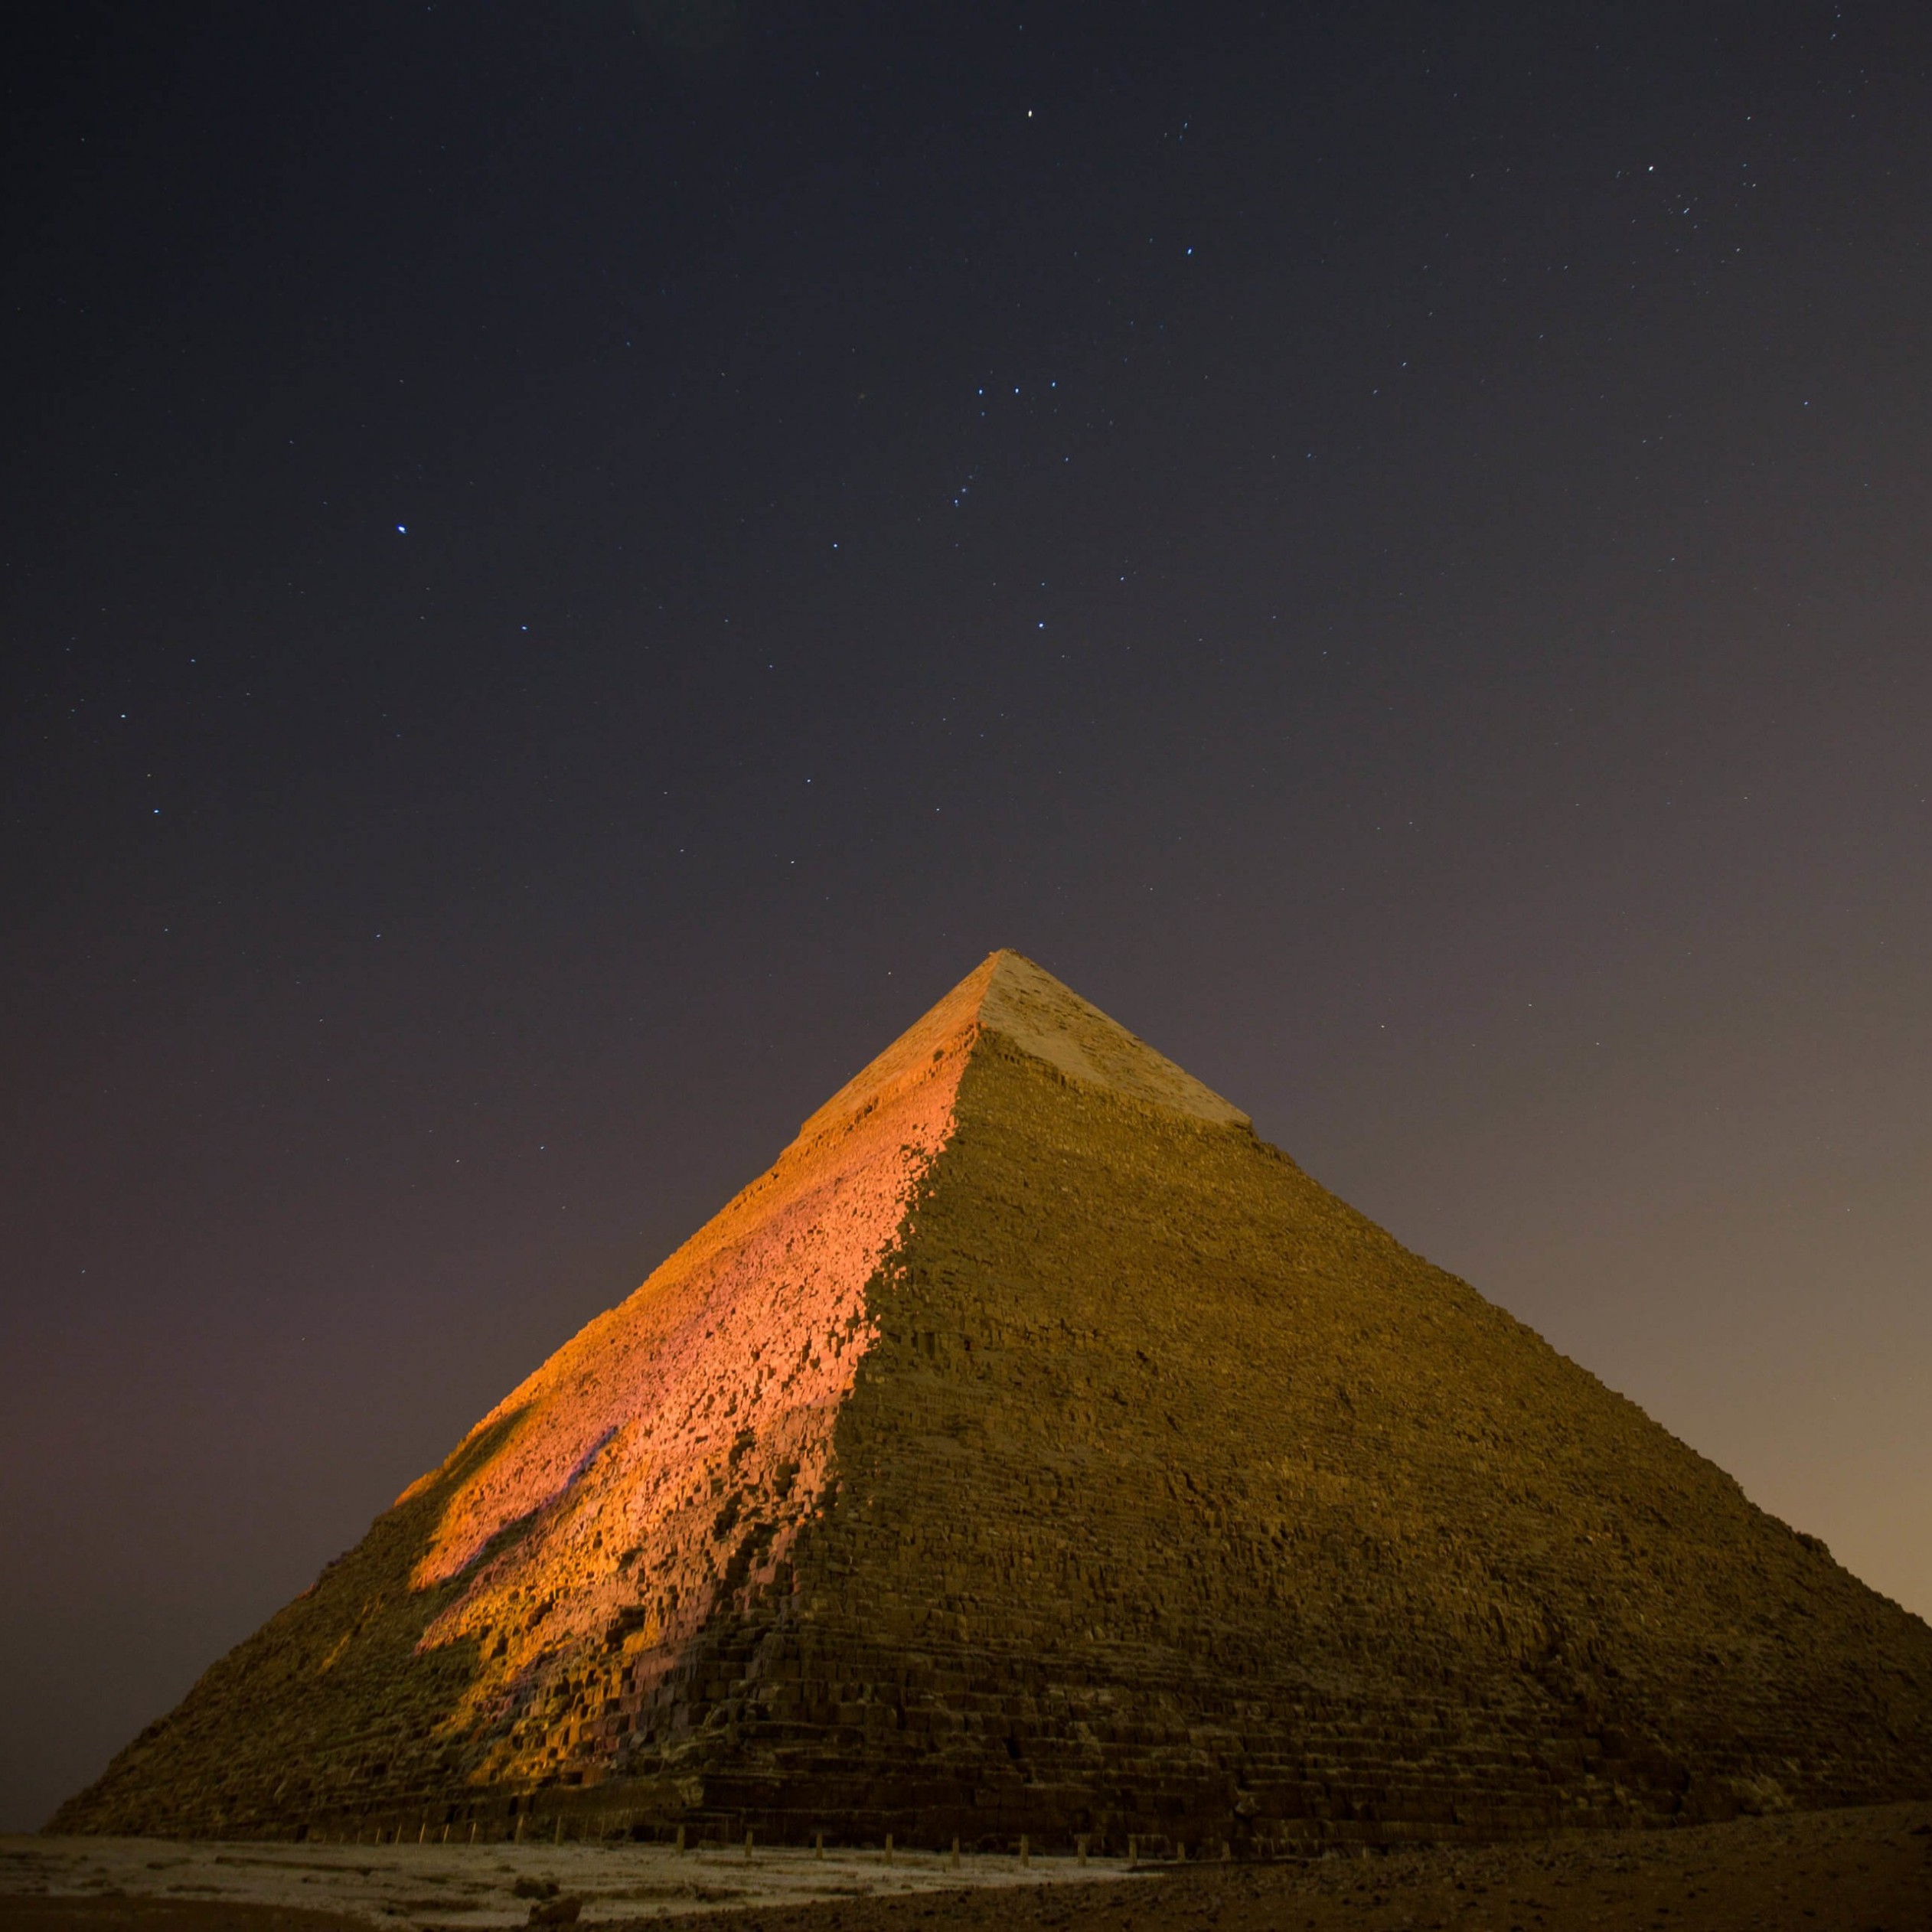 Pyramid by Night Wallpaper for Apple iPad mini 2